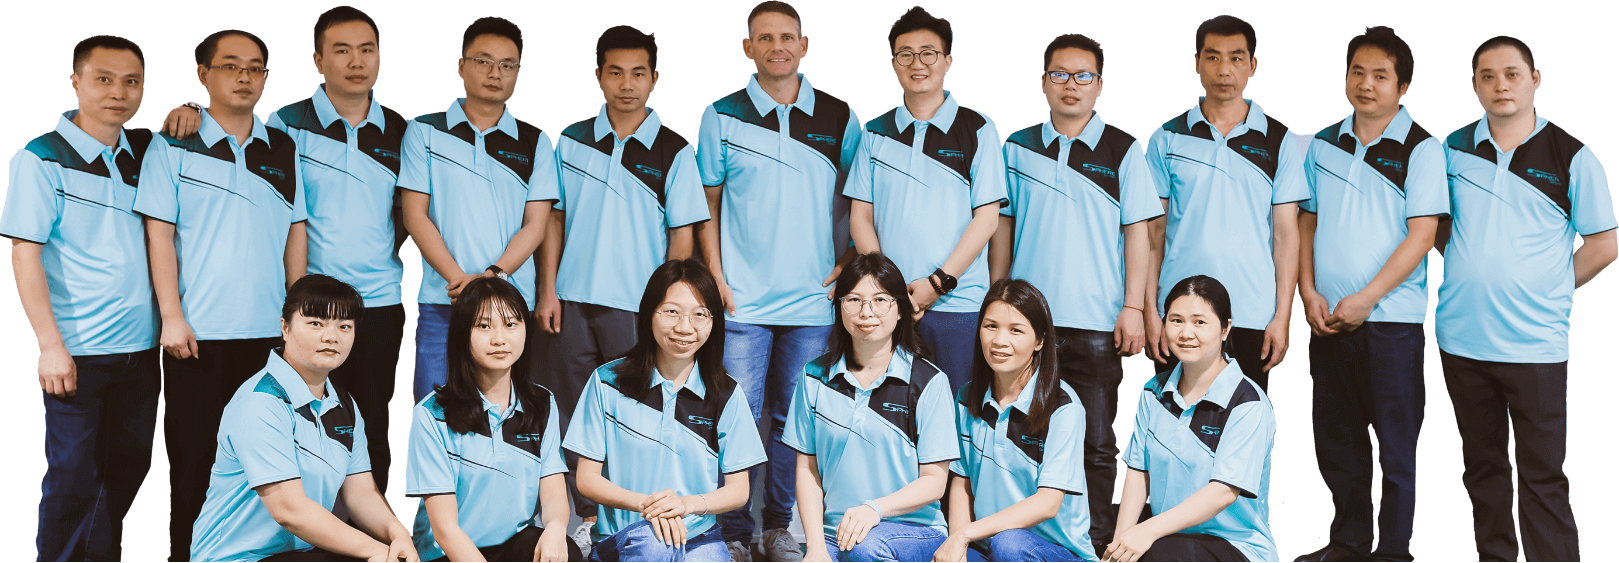 Sphere Sport China team